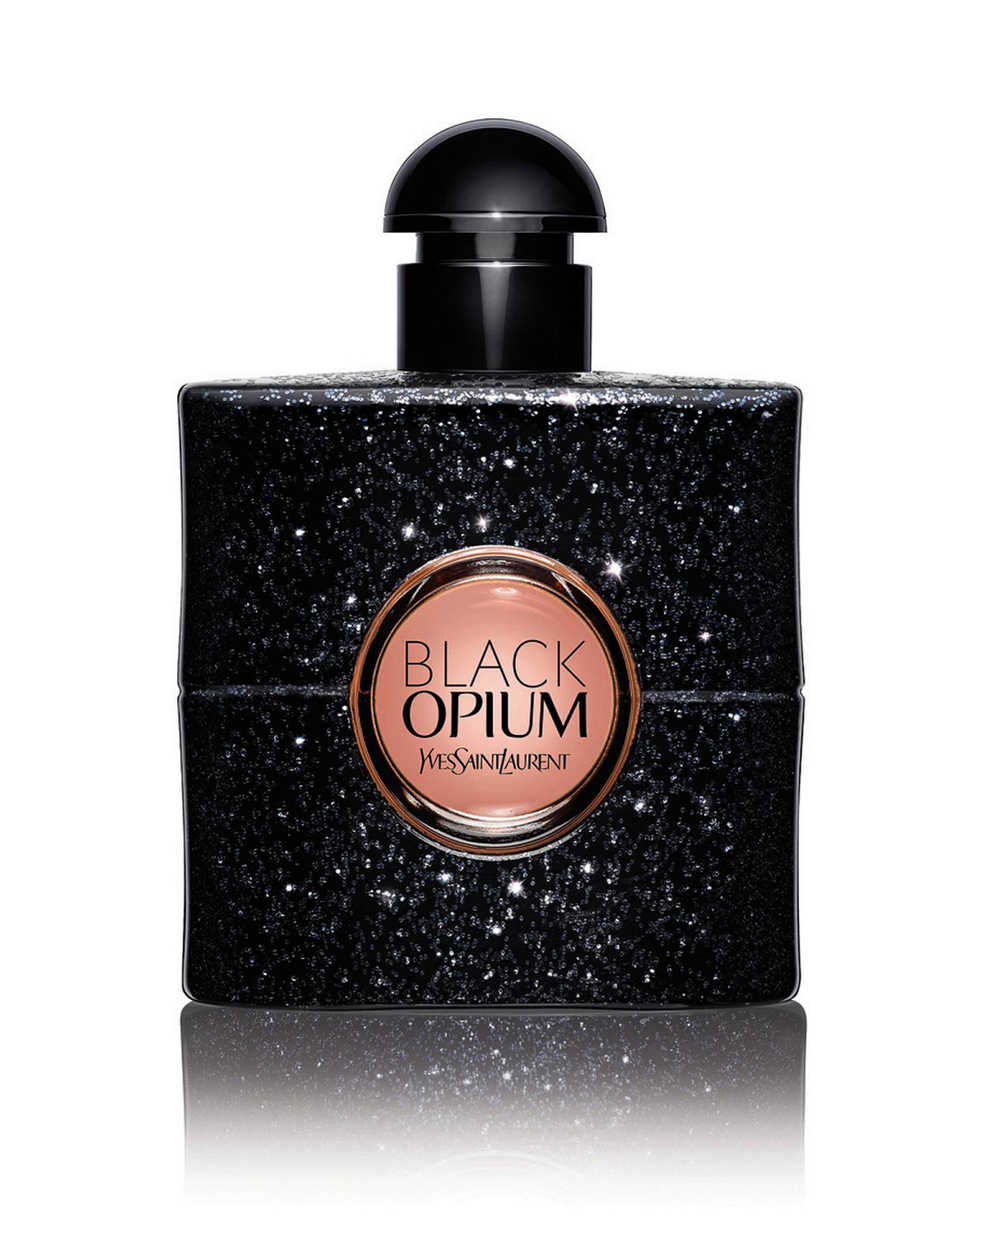 YSL Black Opium EDT 50ml, $140.